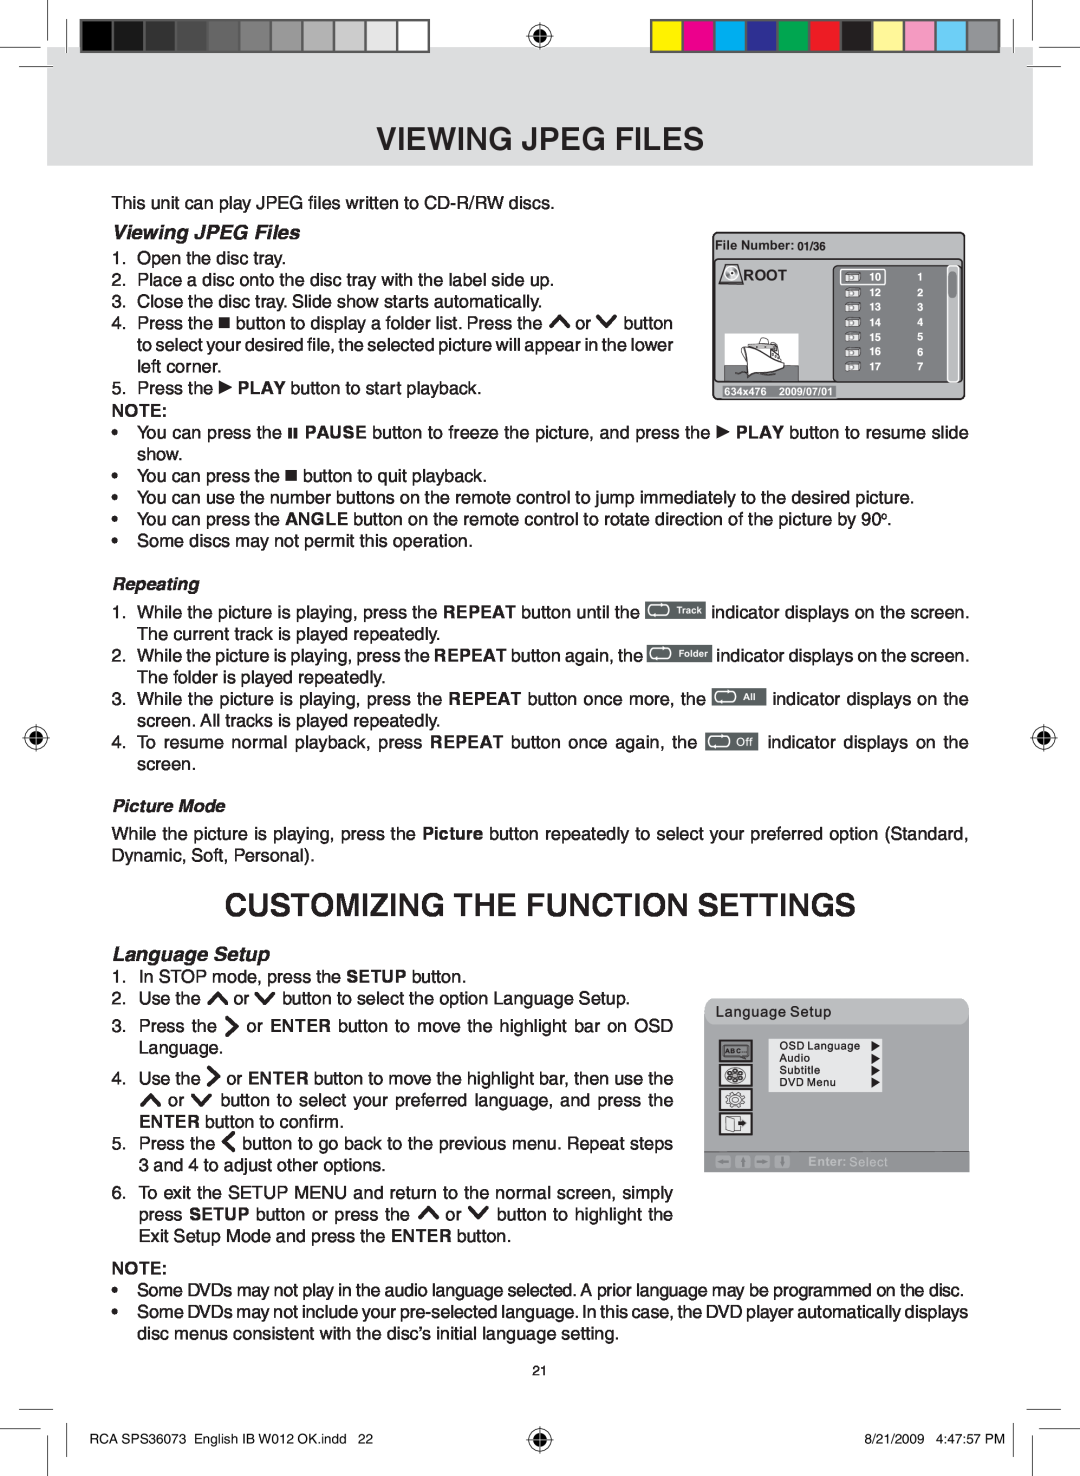 RCA SPS36073 viewing jpeg FILes, Customizing The Function Settings, Viewing JPEG Files, Language Setup, Repeating 